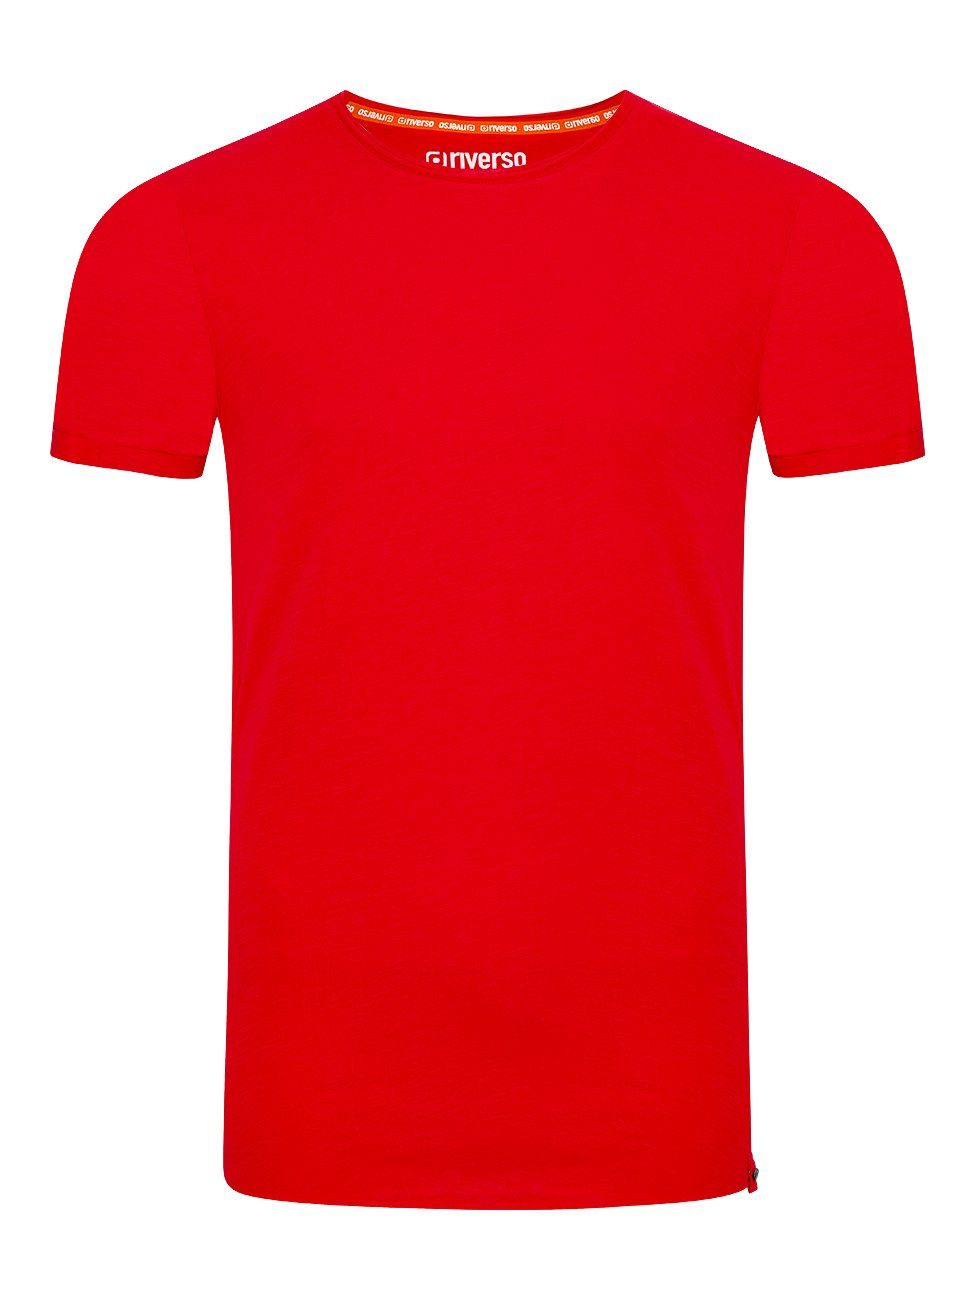 Middle RIVJonas riverso 100% (15300) Baumwolle Red T-Shirt O-Neck (4-tlg)